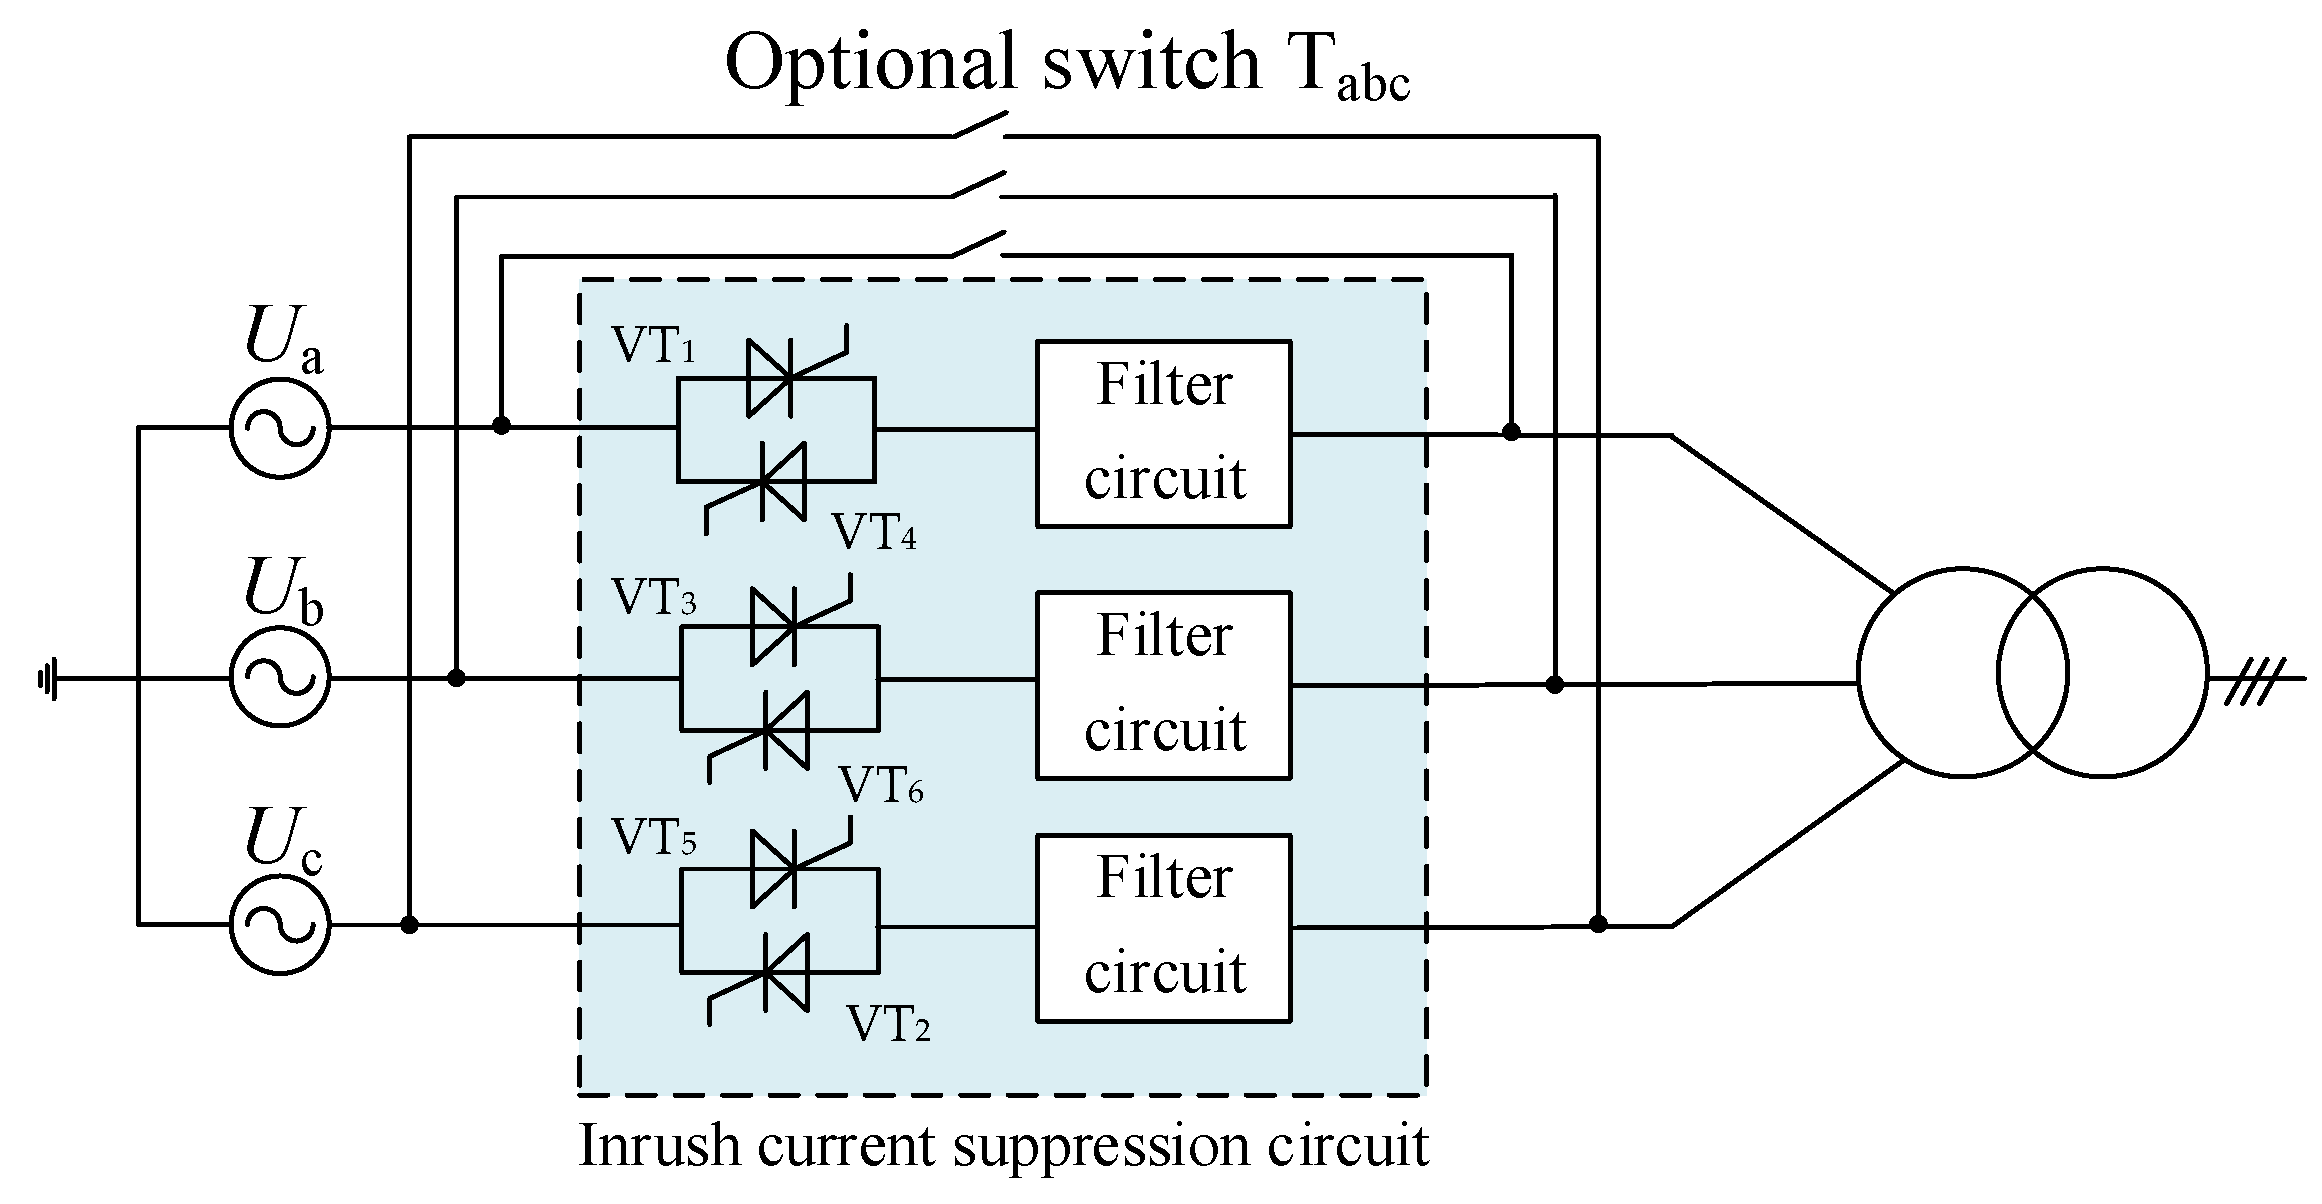 How Soft-Start Circuits Work